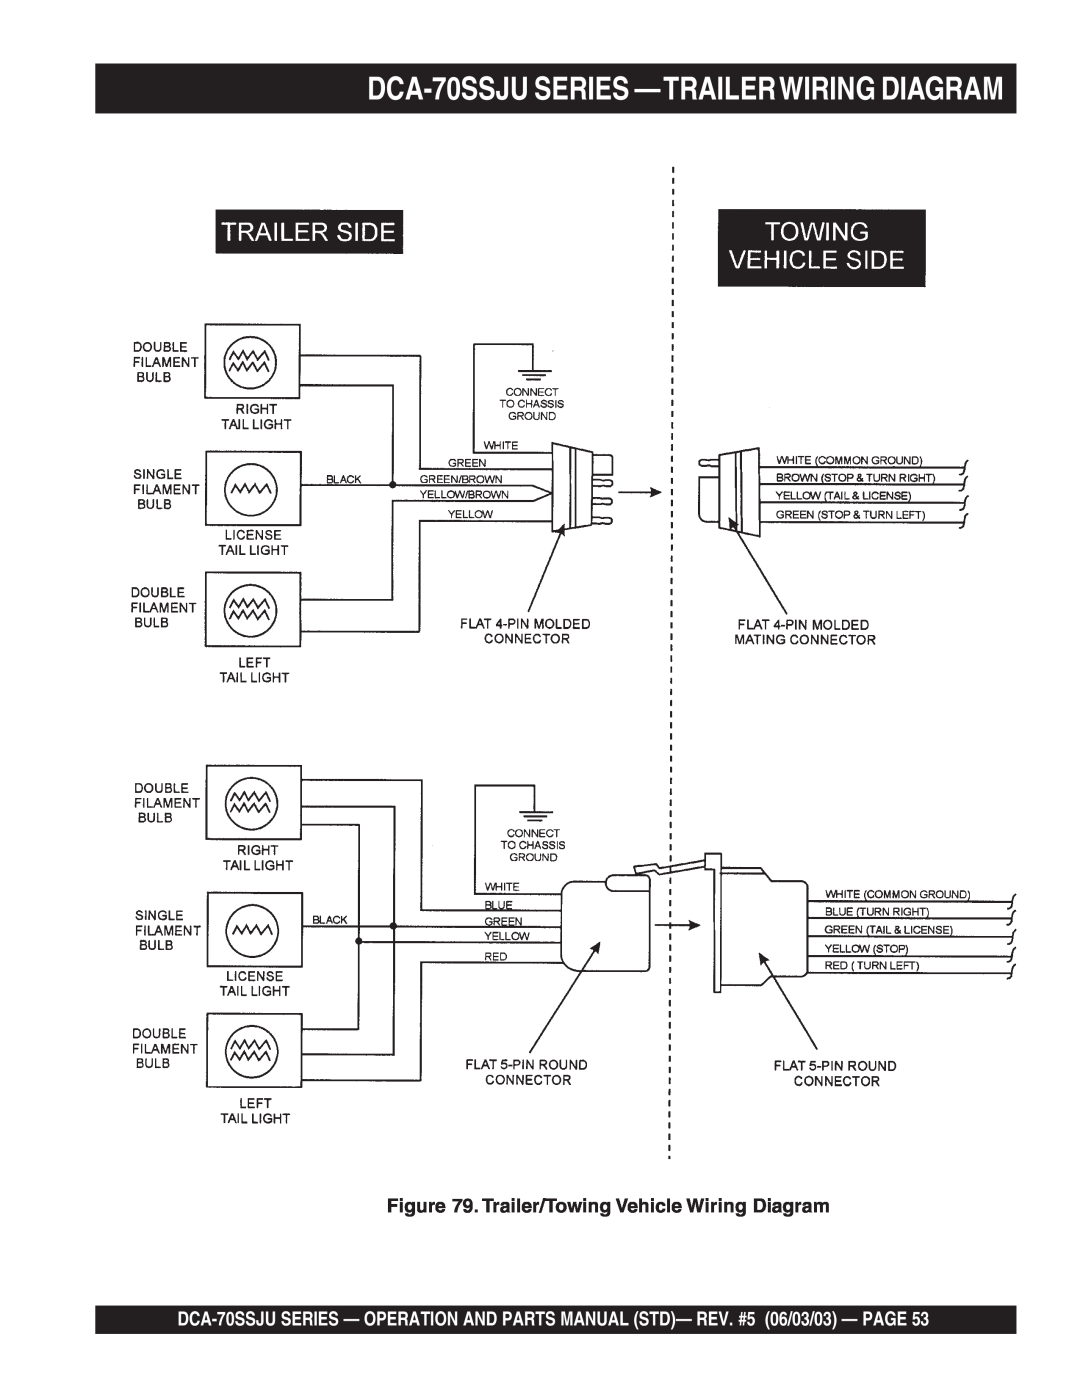 Multiquip operation manual DCA-70SSJUSERIES —TRAILERWIRINGDIAGRAM, Trailer/Towing Vehicle Wiring Diagram 